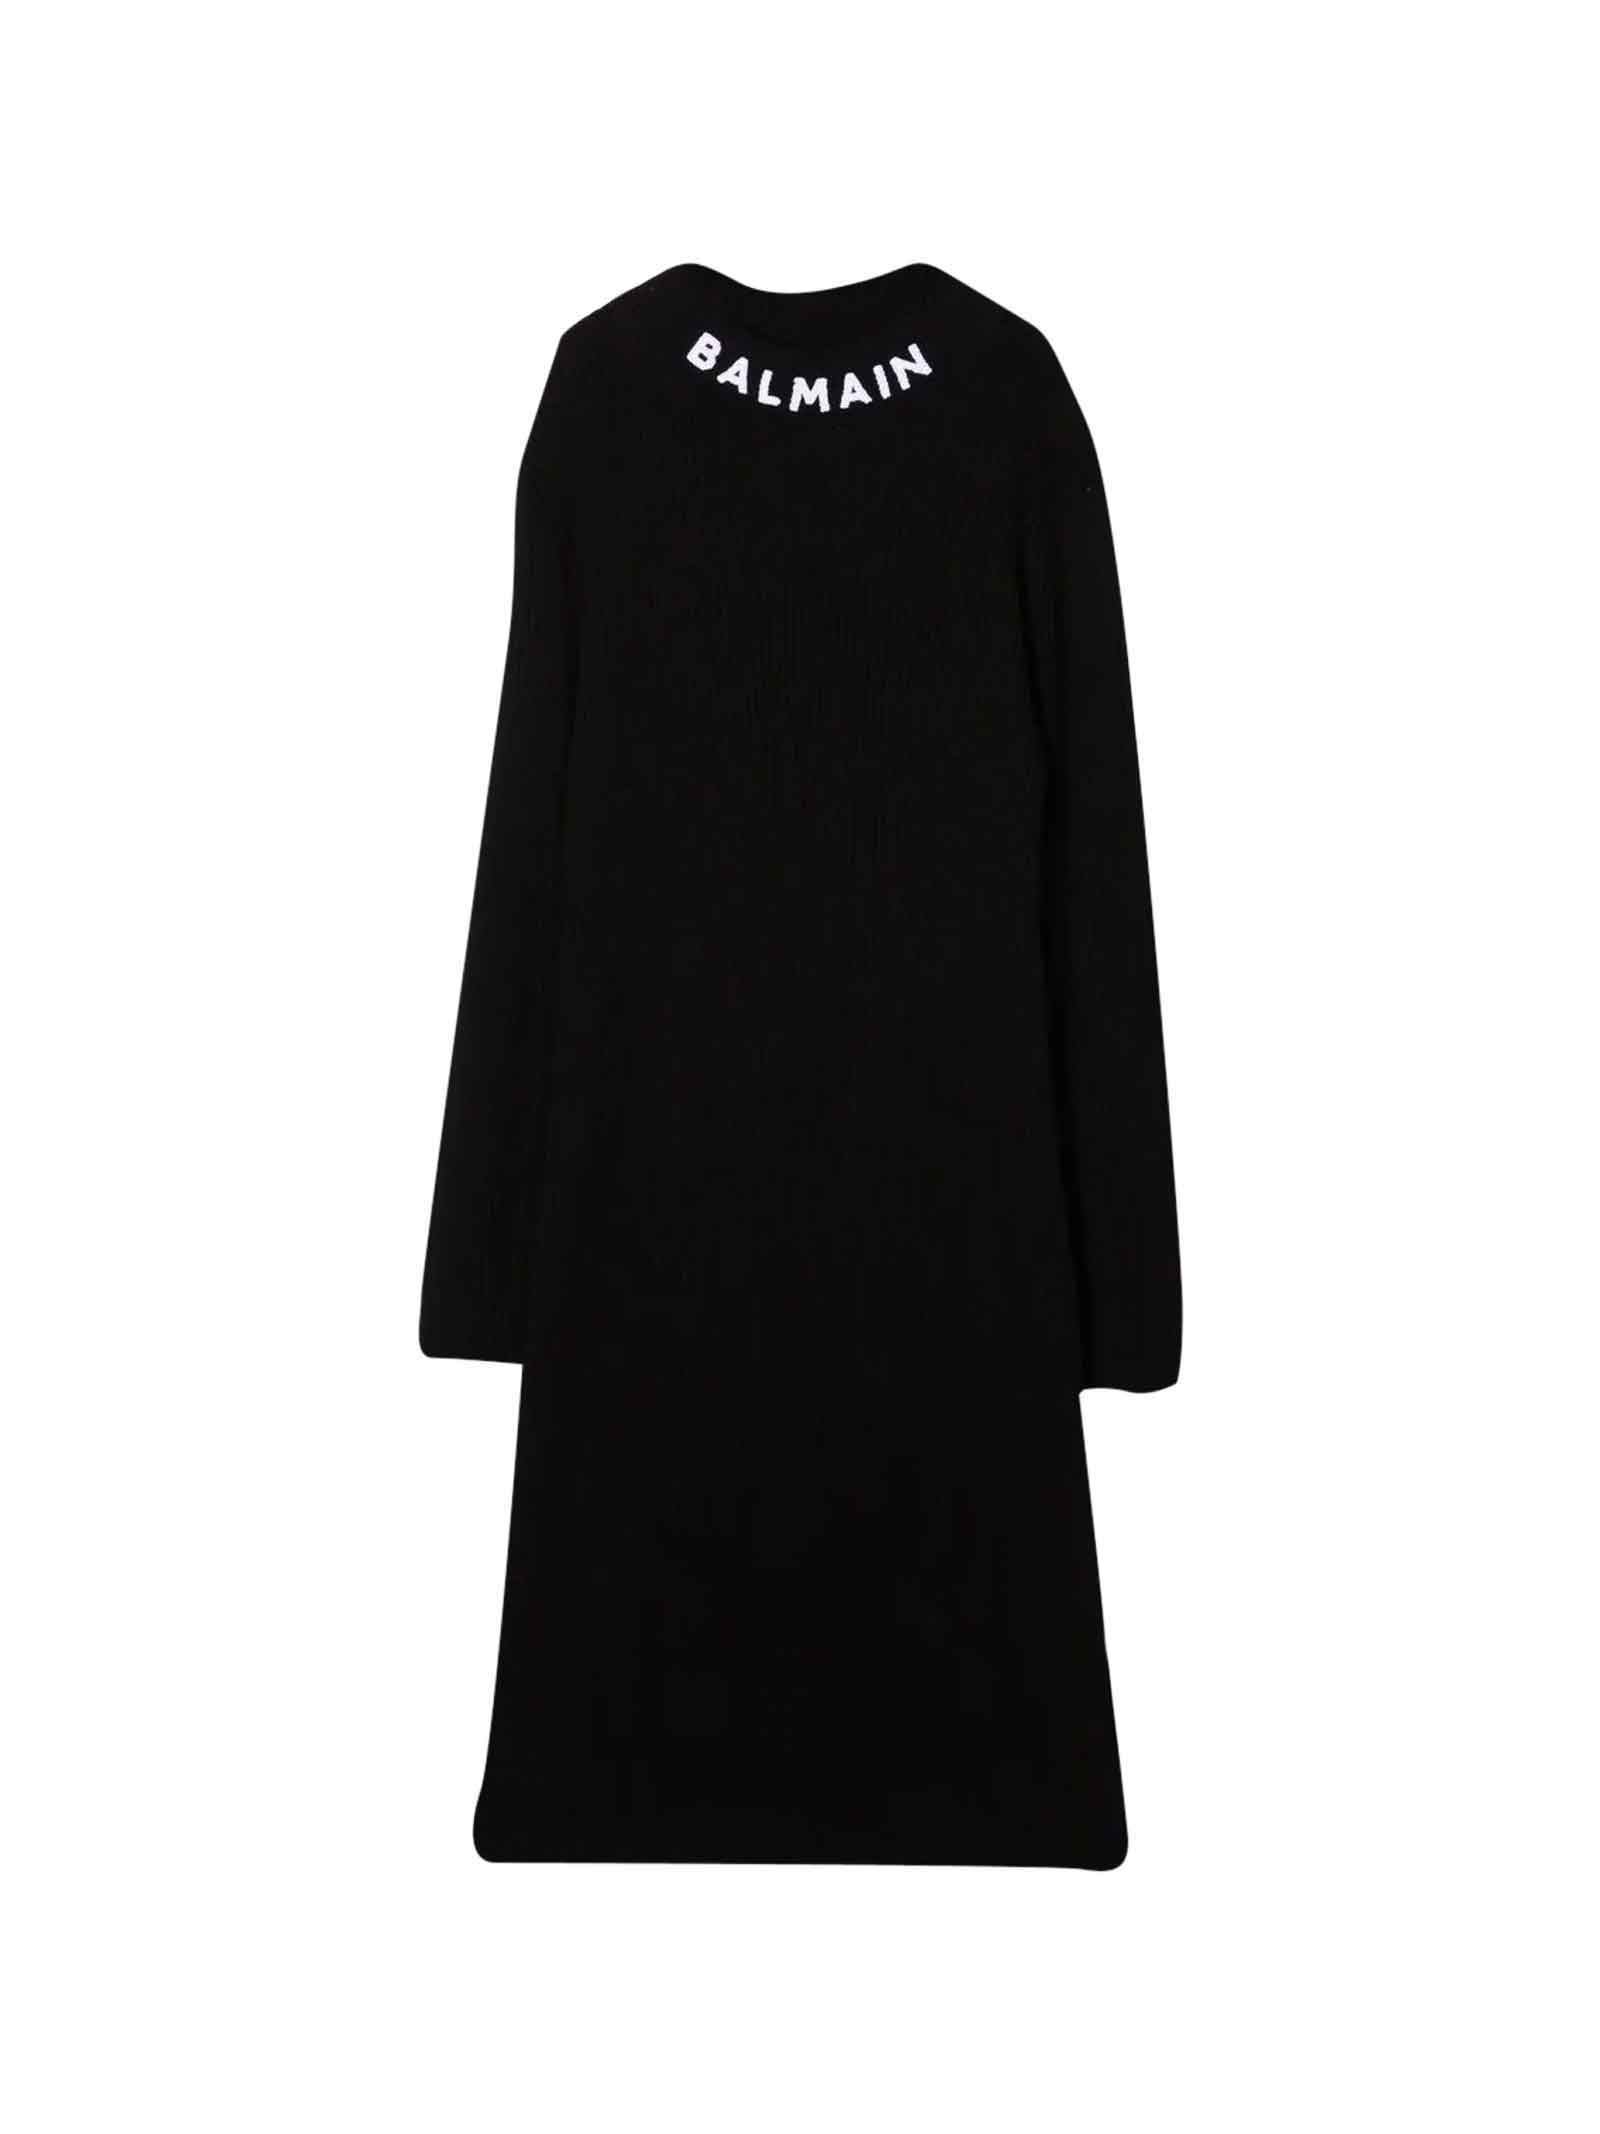 Balmain Black Dress With Logo